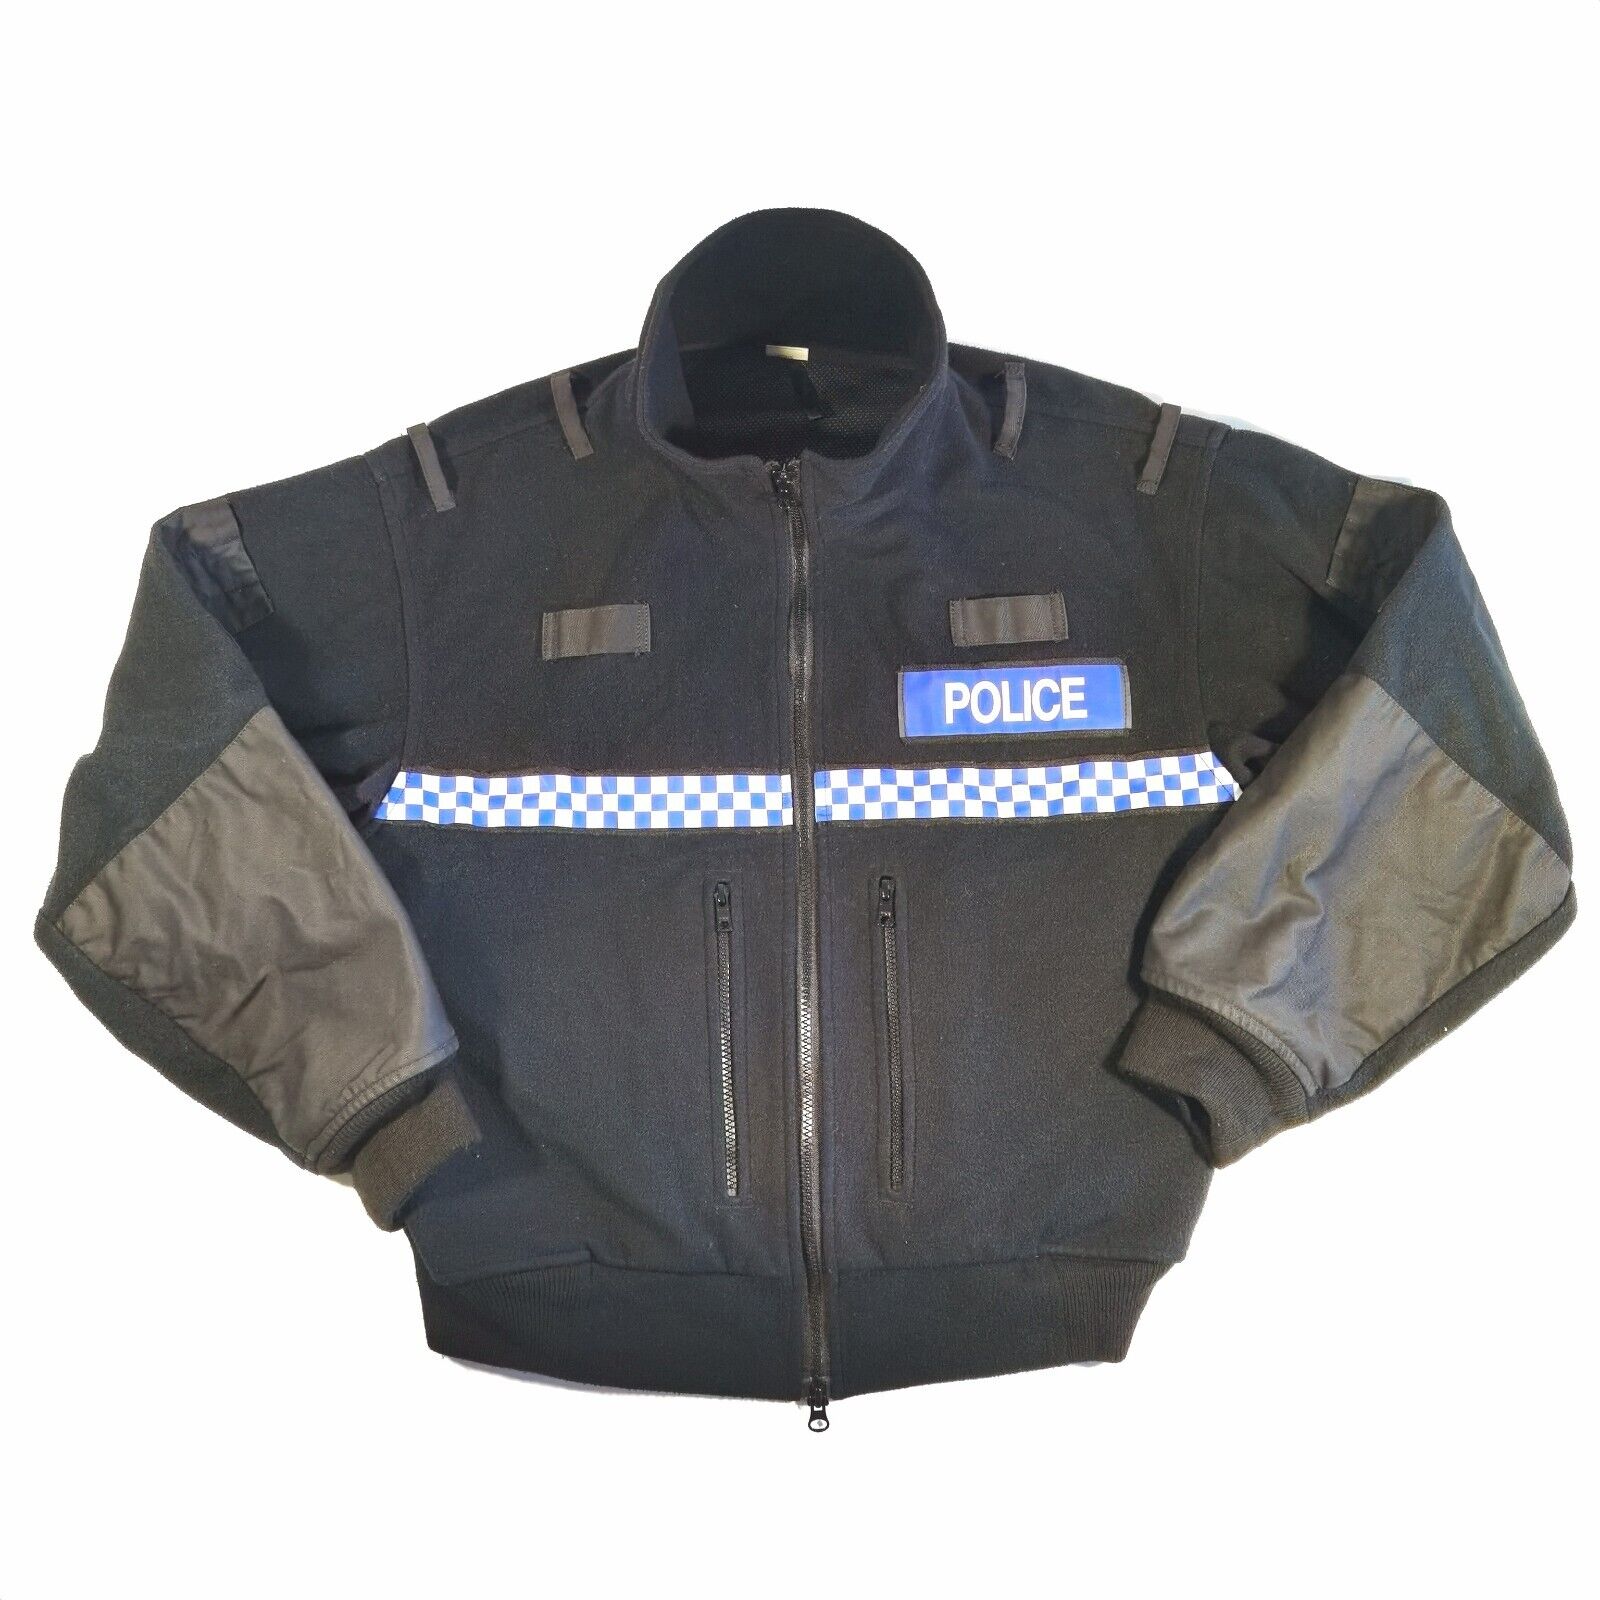 Genuine Ex British Police Fleece Jacket size Small Short with Reflective Straps